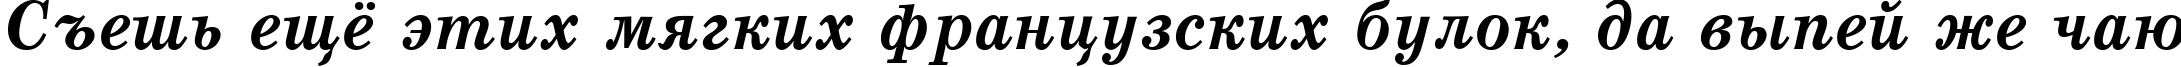 Пример написания шрифтом School Bold Italic:001.001 текста на русском